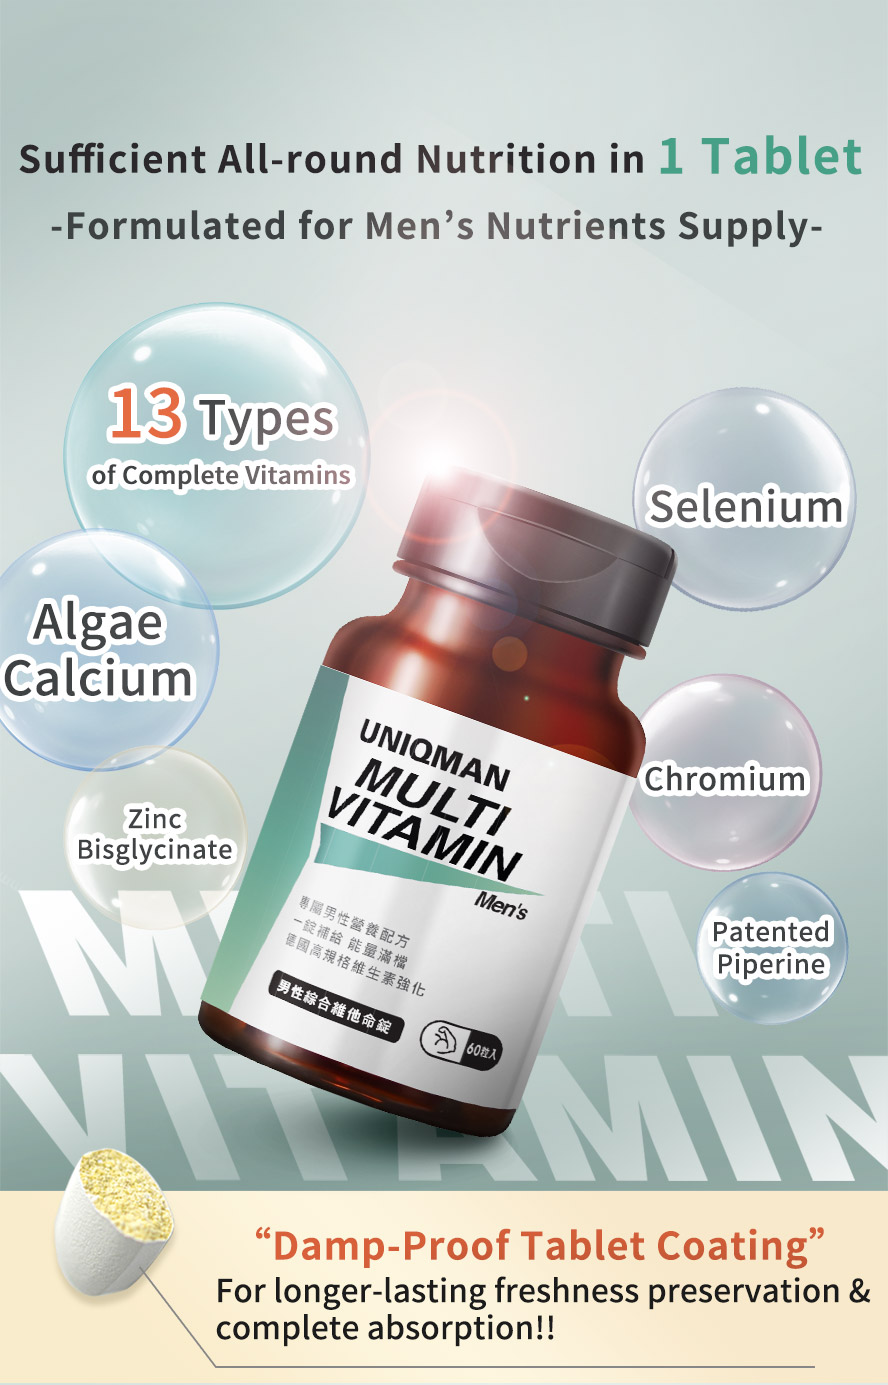 A nutritional formula created exclusively for men, contains 13 vitamins, zinc, calcium, selenium, and chromium